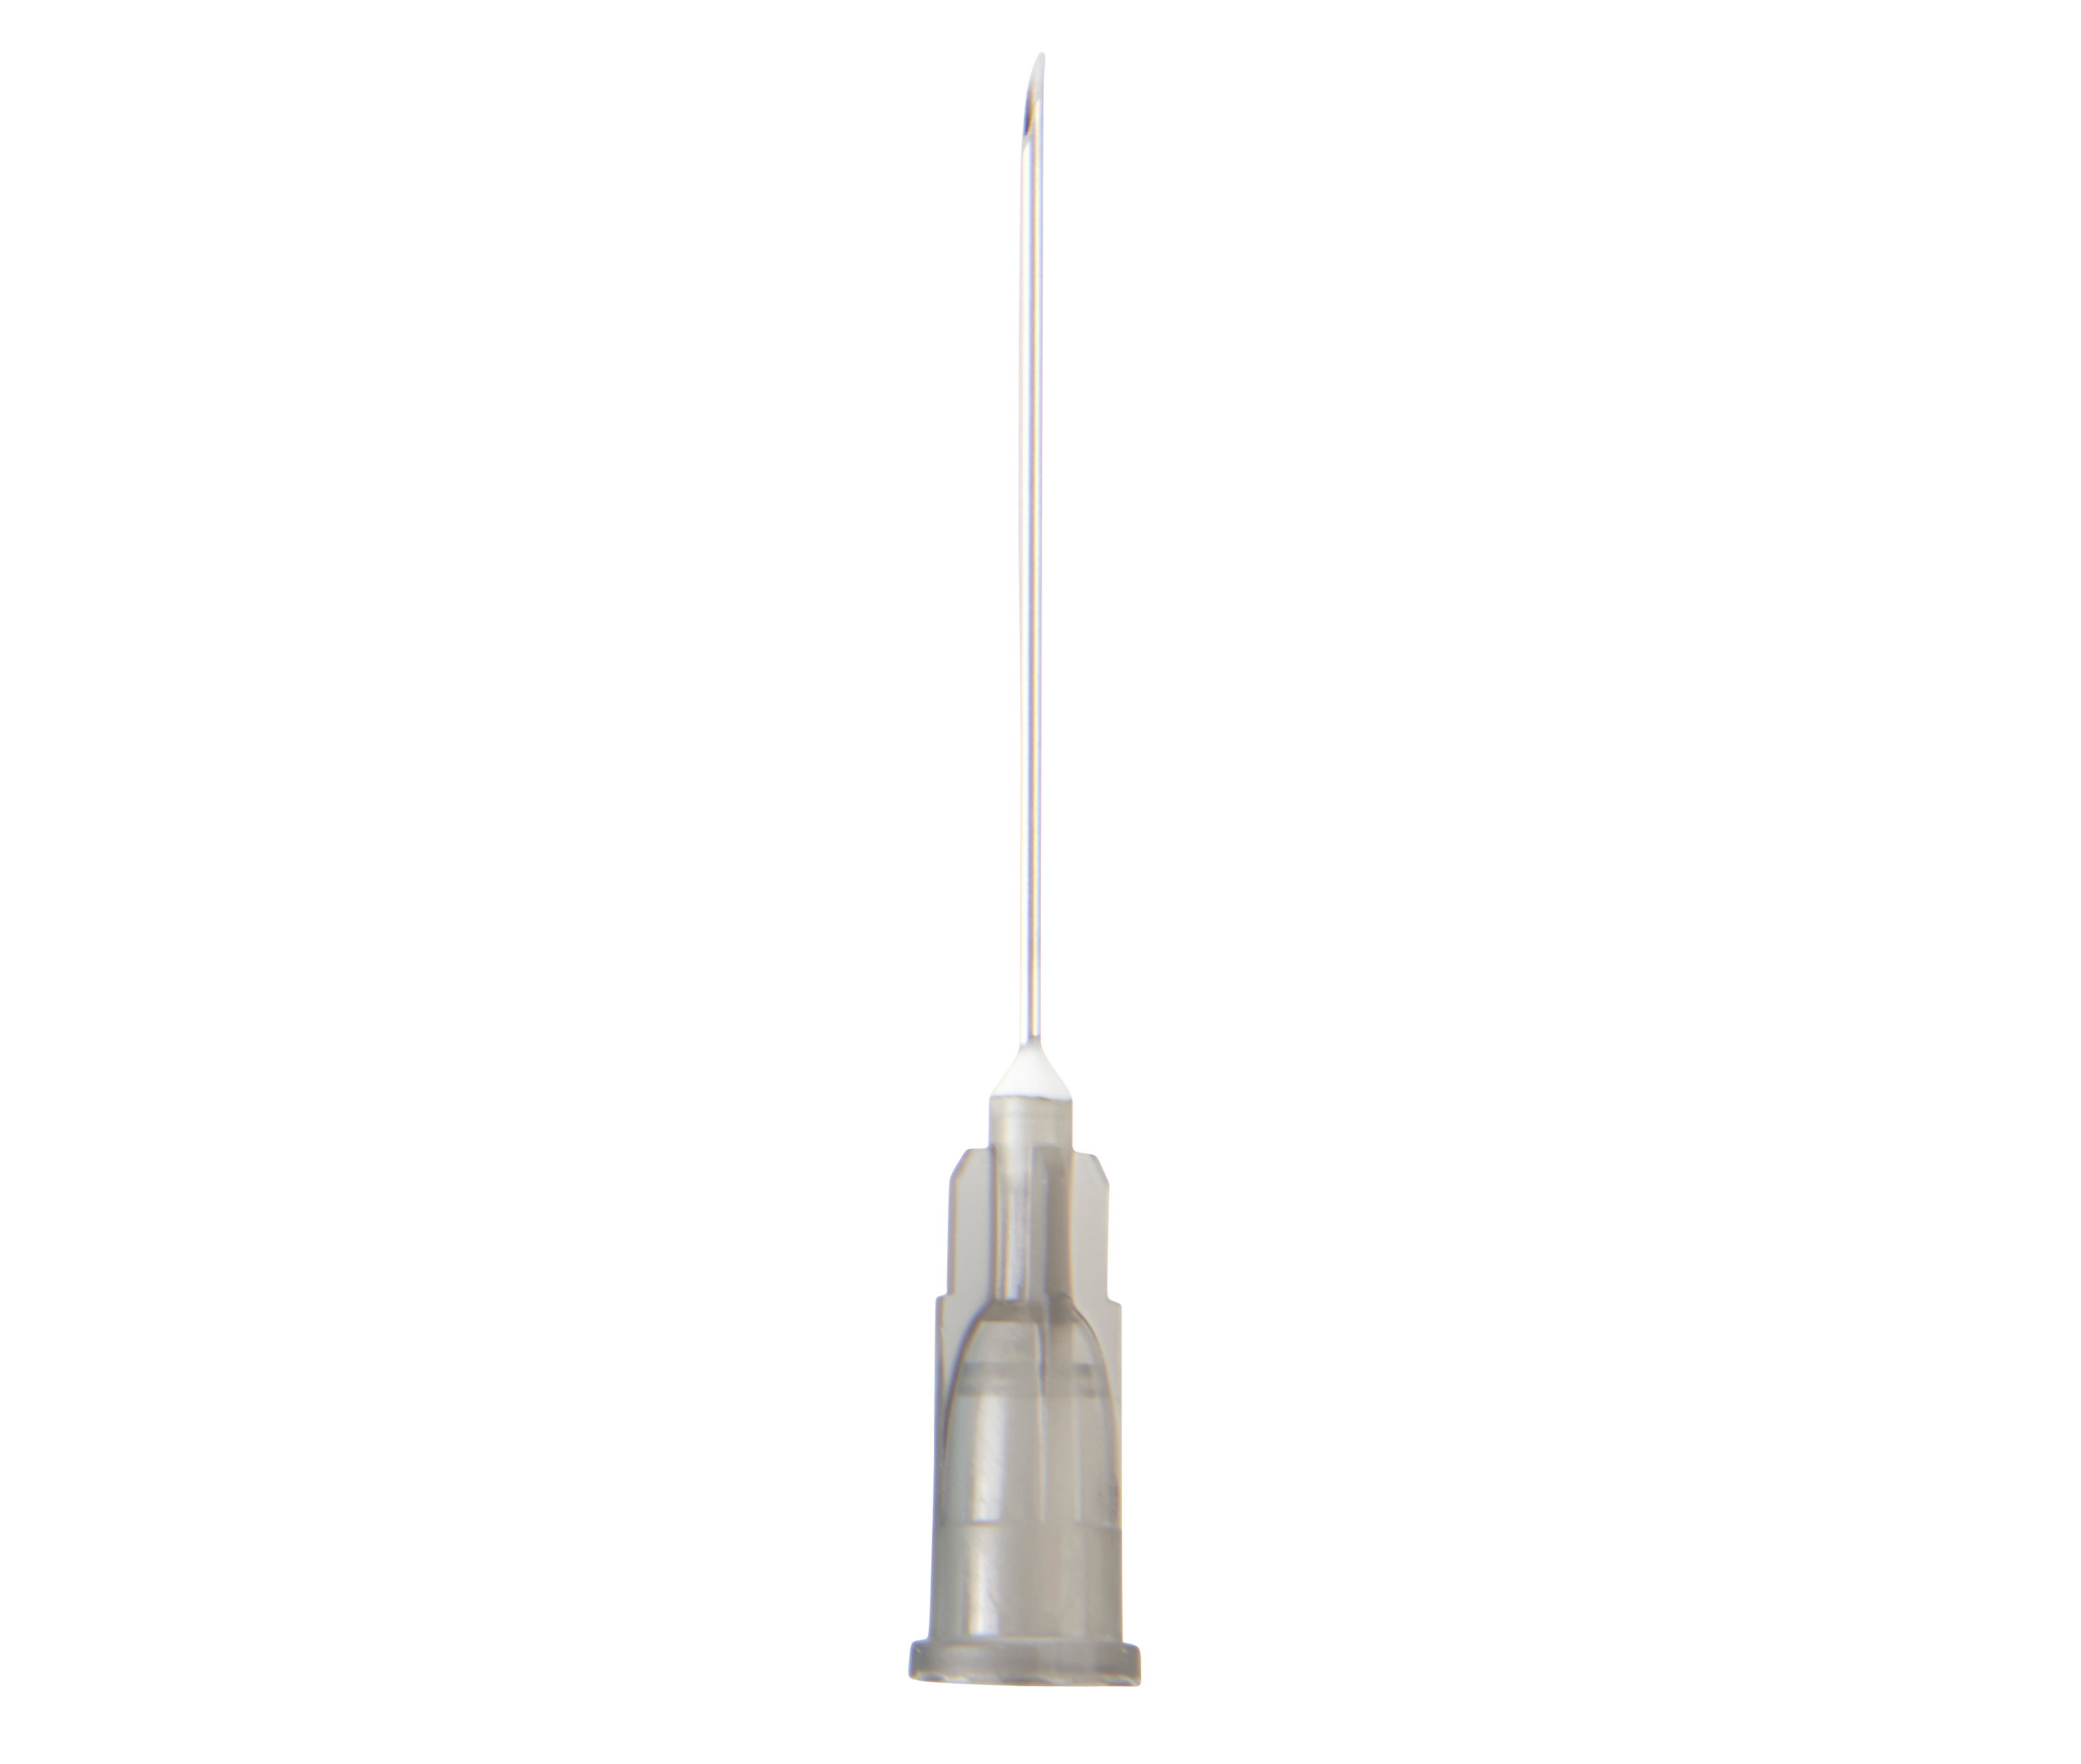 KRUUSE Disposable Needle, 0.7 x 30 mm, 22G x 1 1/4, black, 100/pk